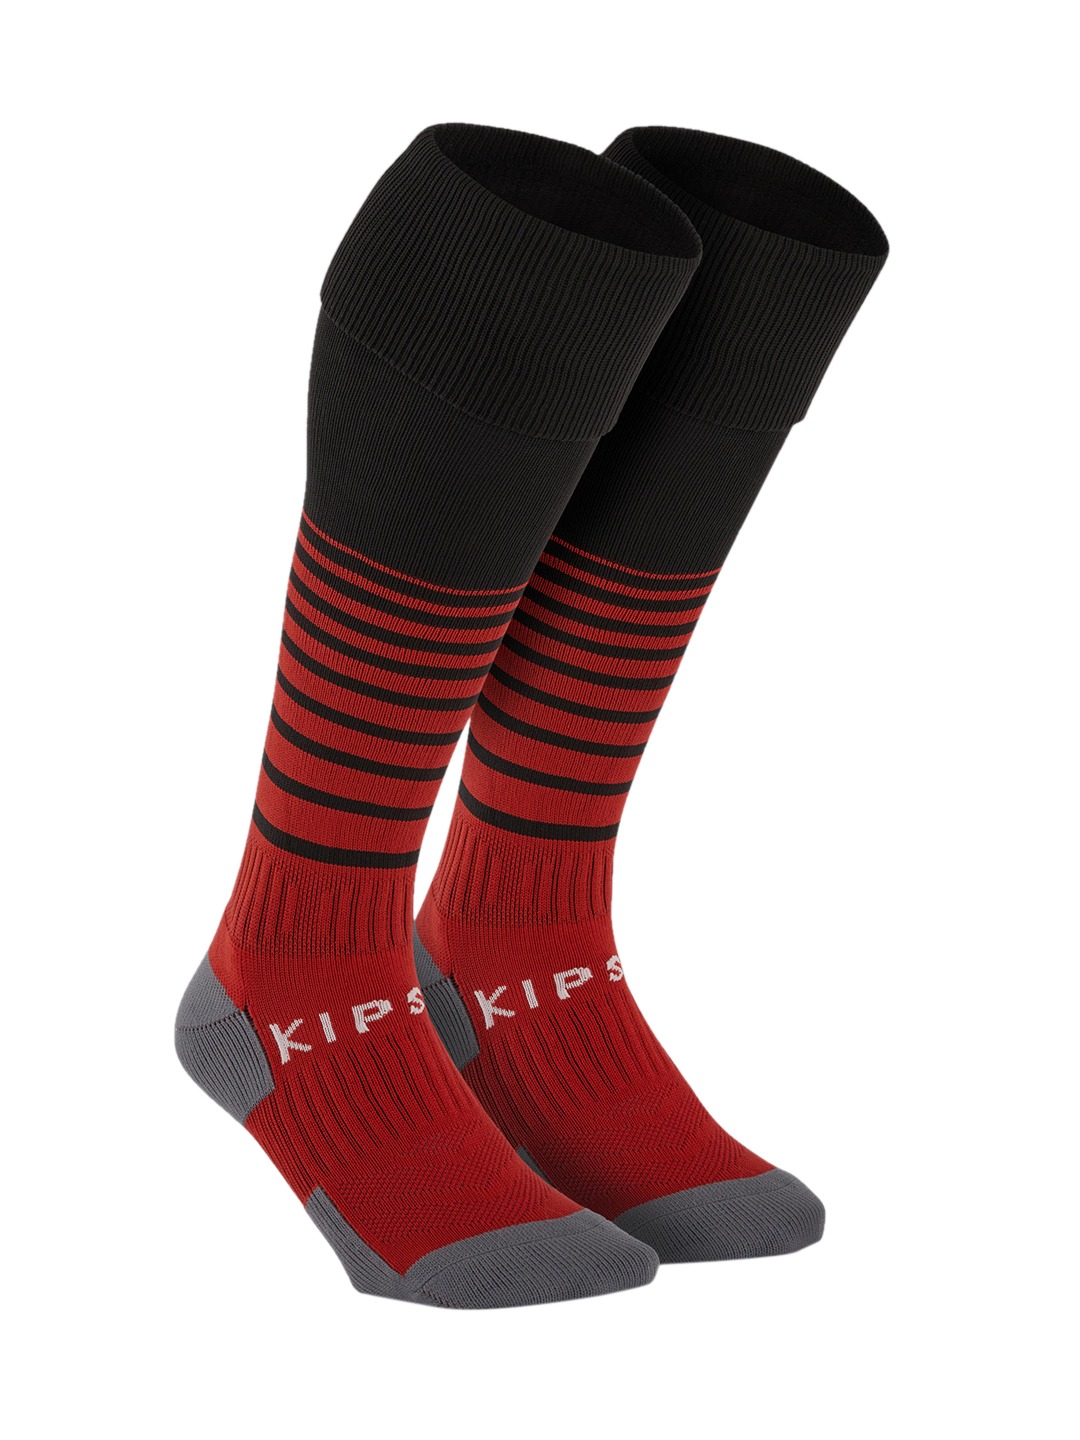 Accessories Socks | Kipsta By Decathlon Unisex Red & Black Striped Knee-Length Football Socks - VJ59630